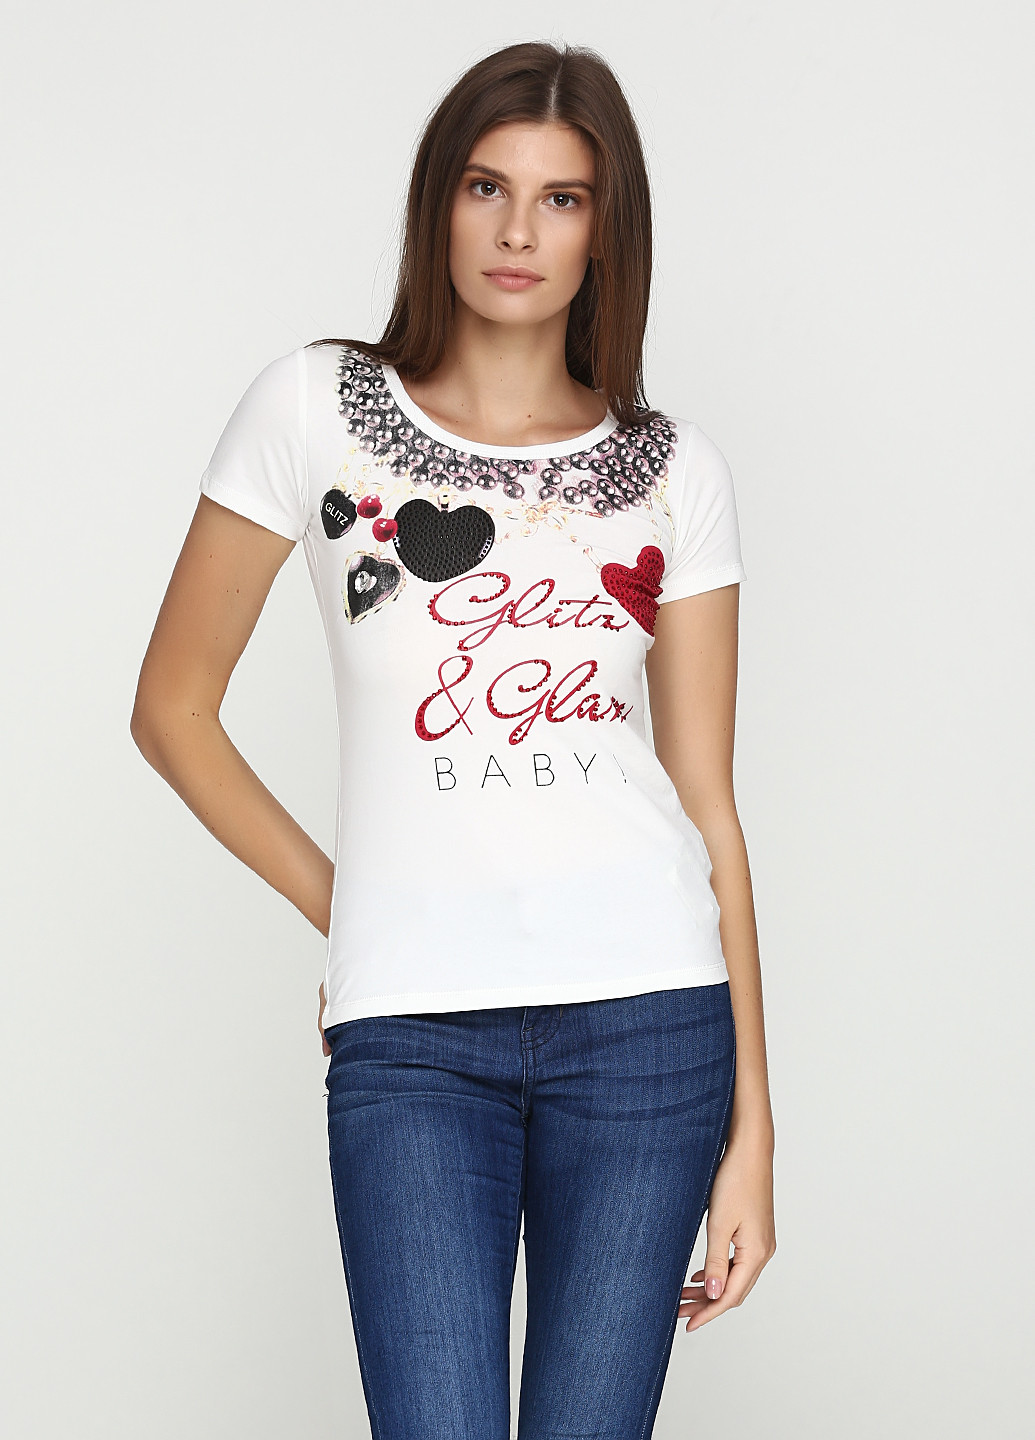 Белая летняя футболка Glitz & Glam